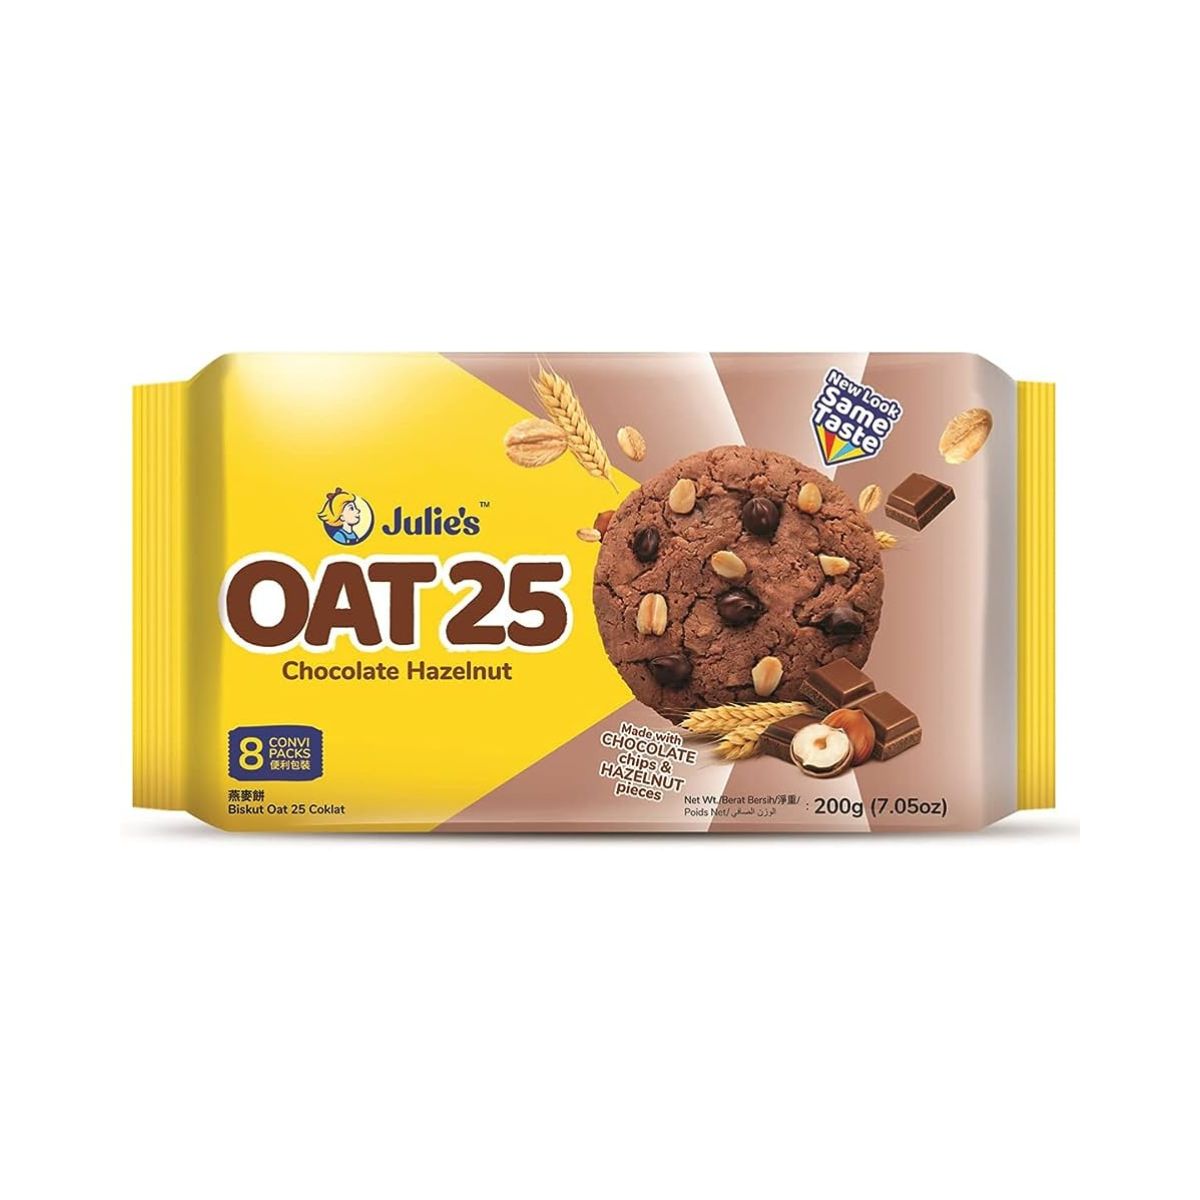 Julie's Oat 25 - Chocolate Hazelnut - 8 Convi Packs - 200g